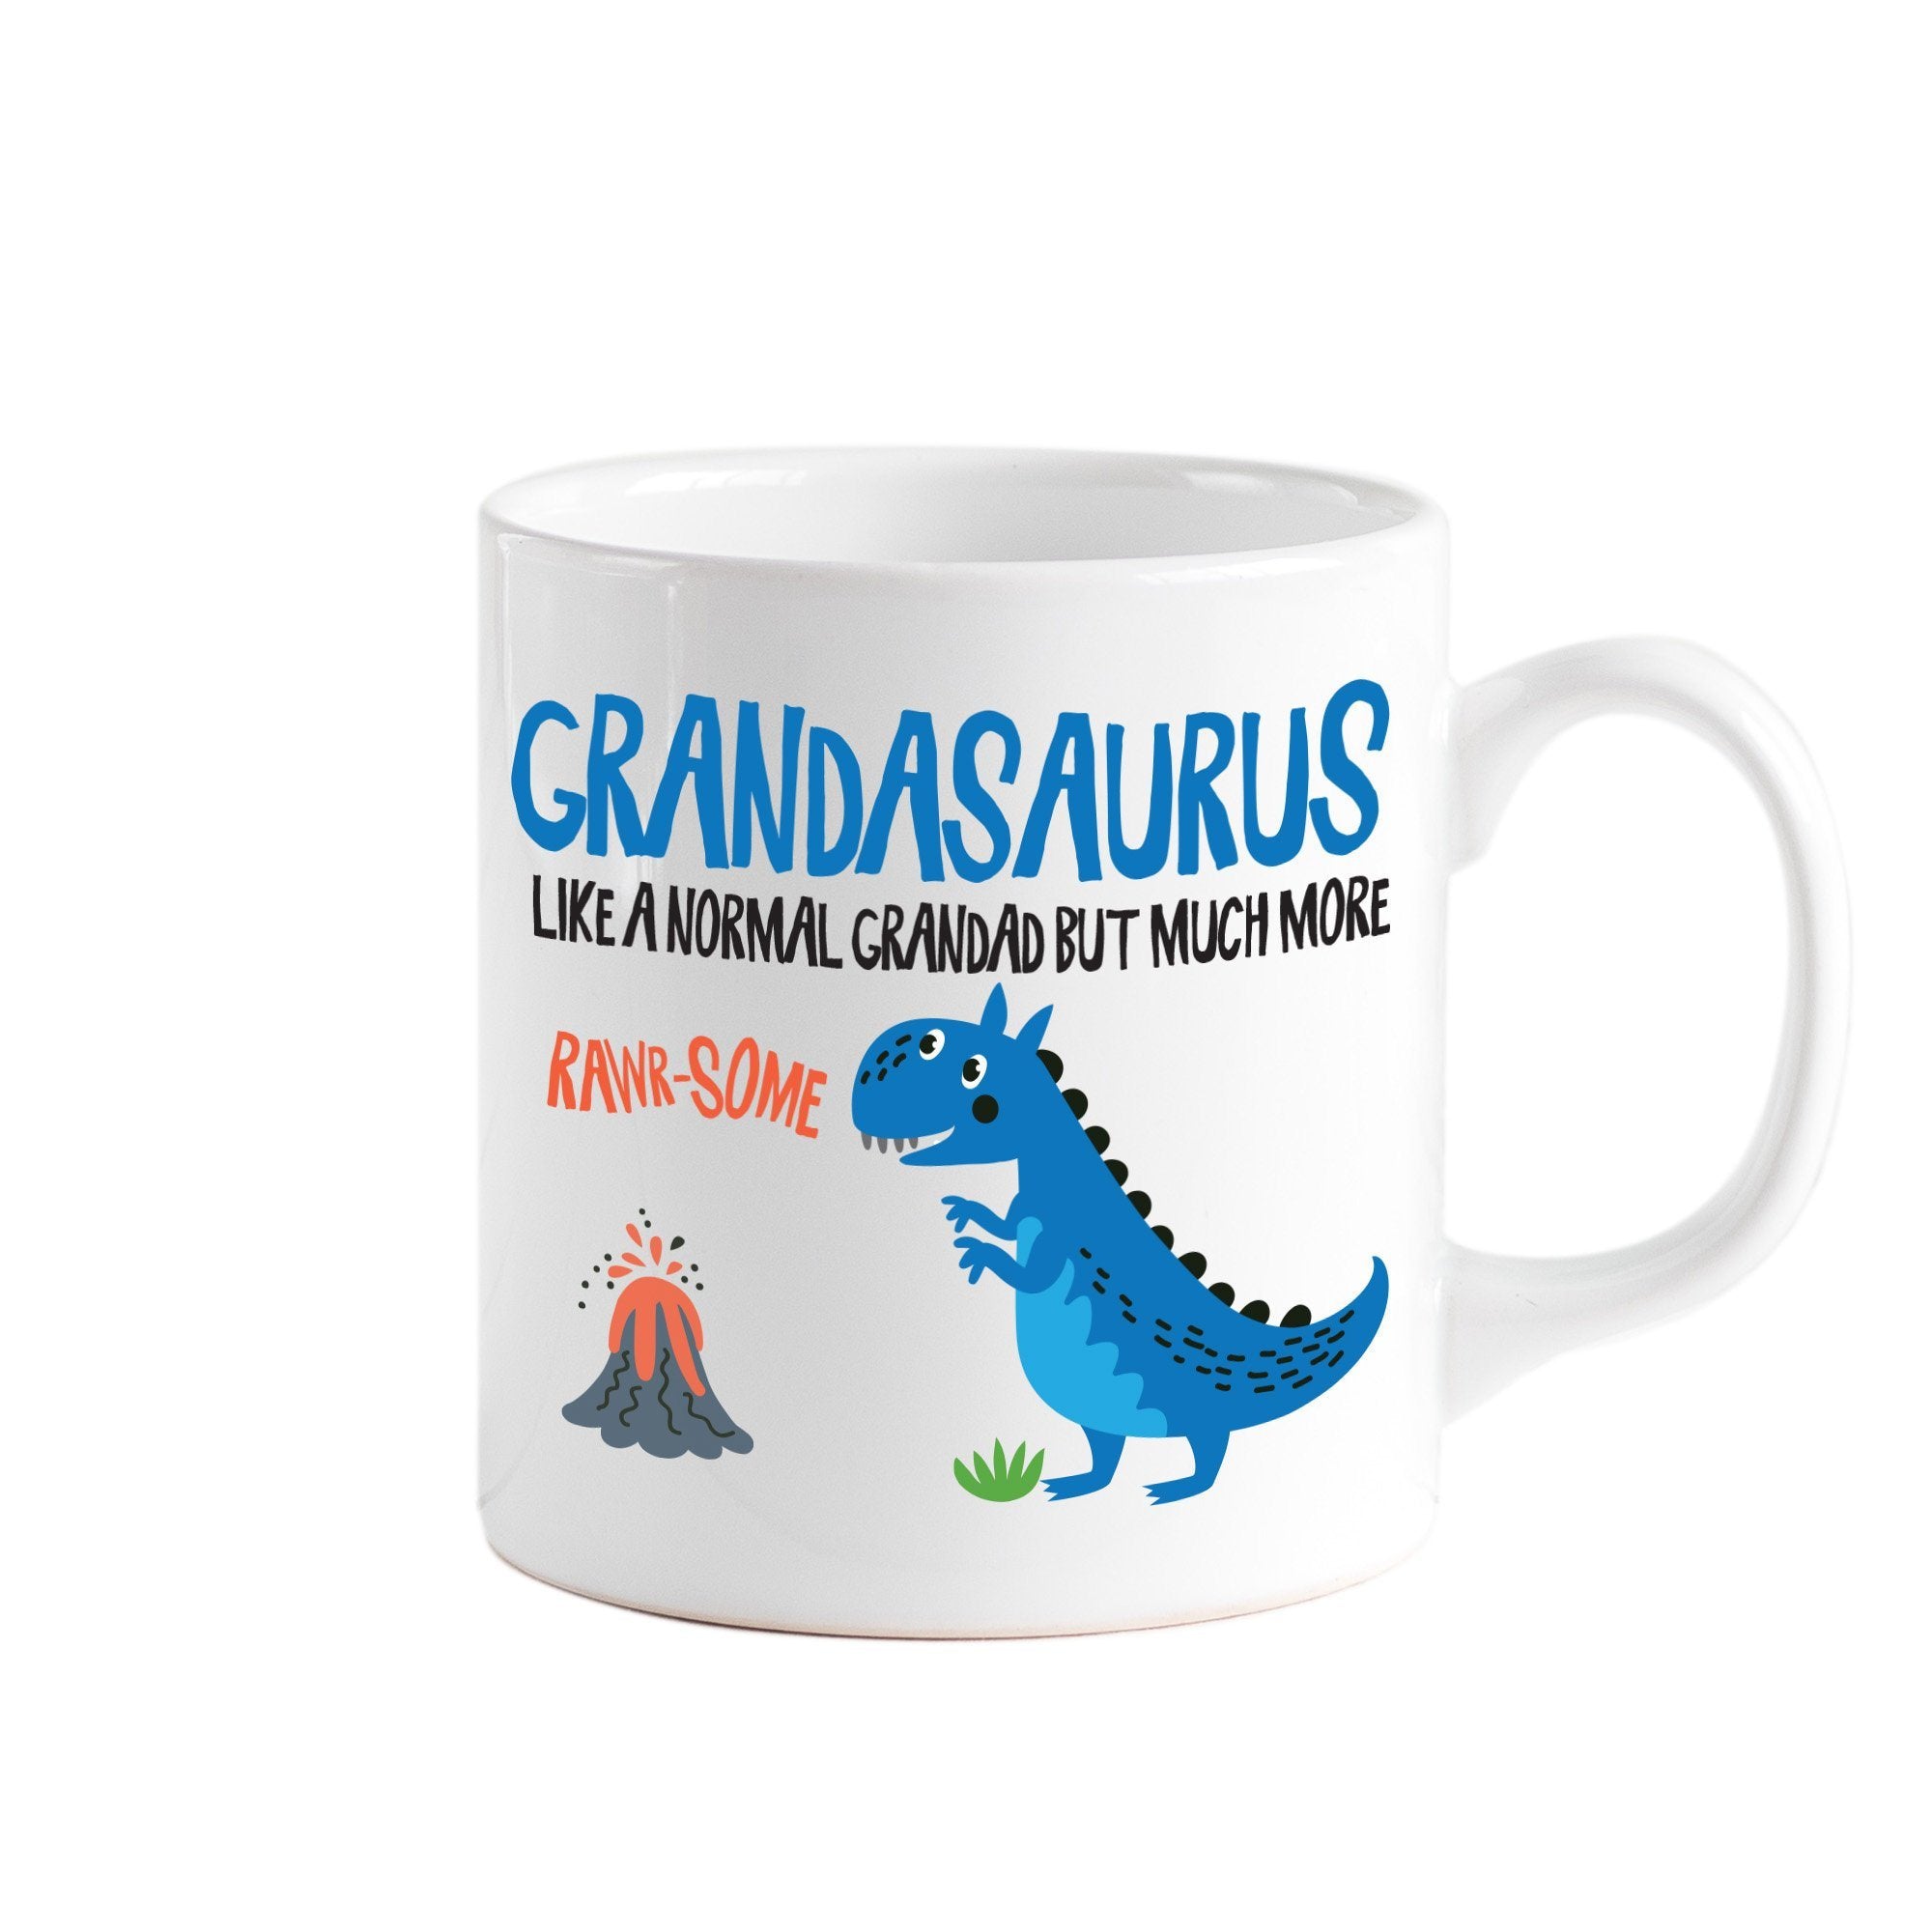 Funny grandad gift, Grandasaurus mug, First Father's Day gift, Grandpa Dinosaur Mug